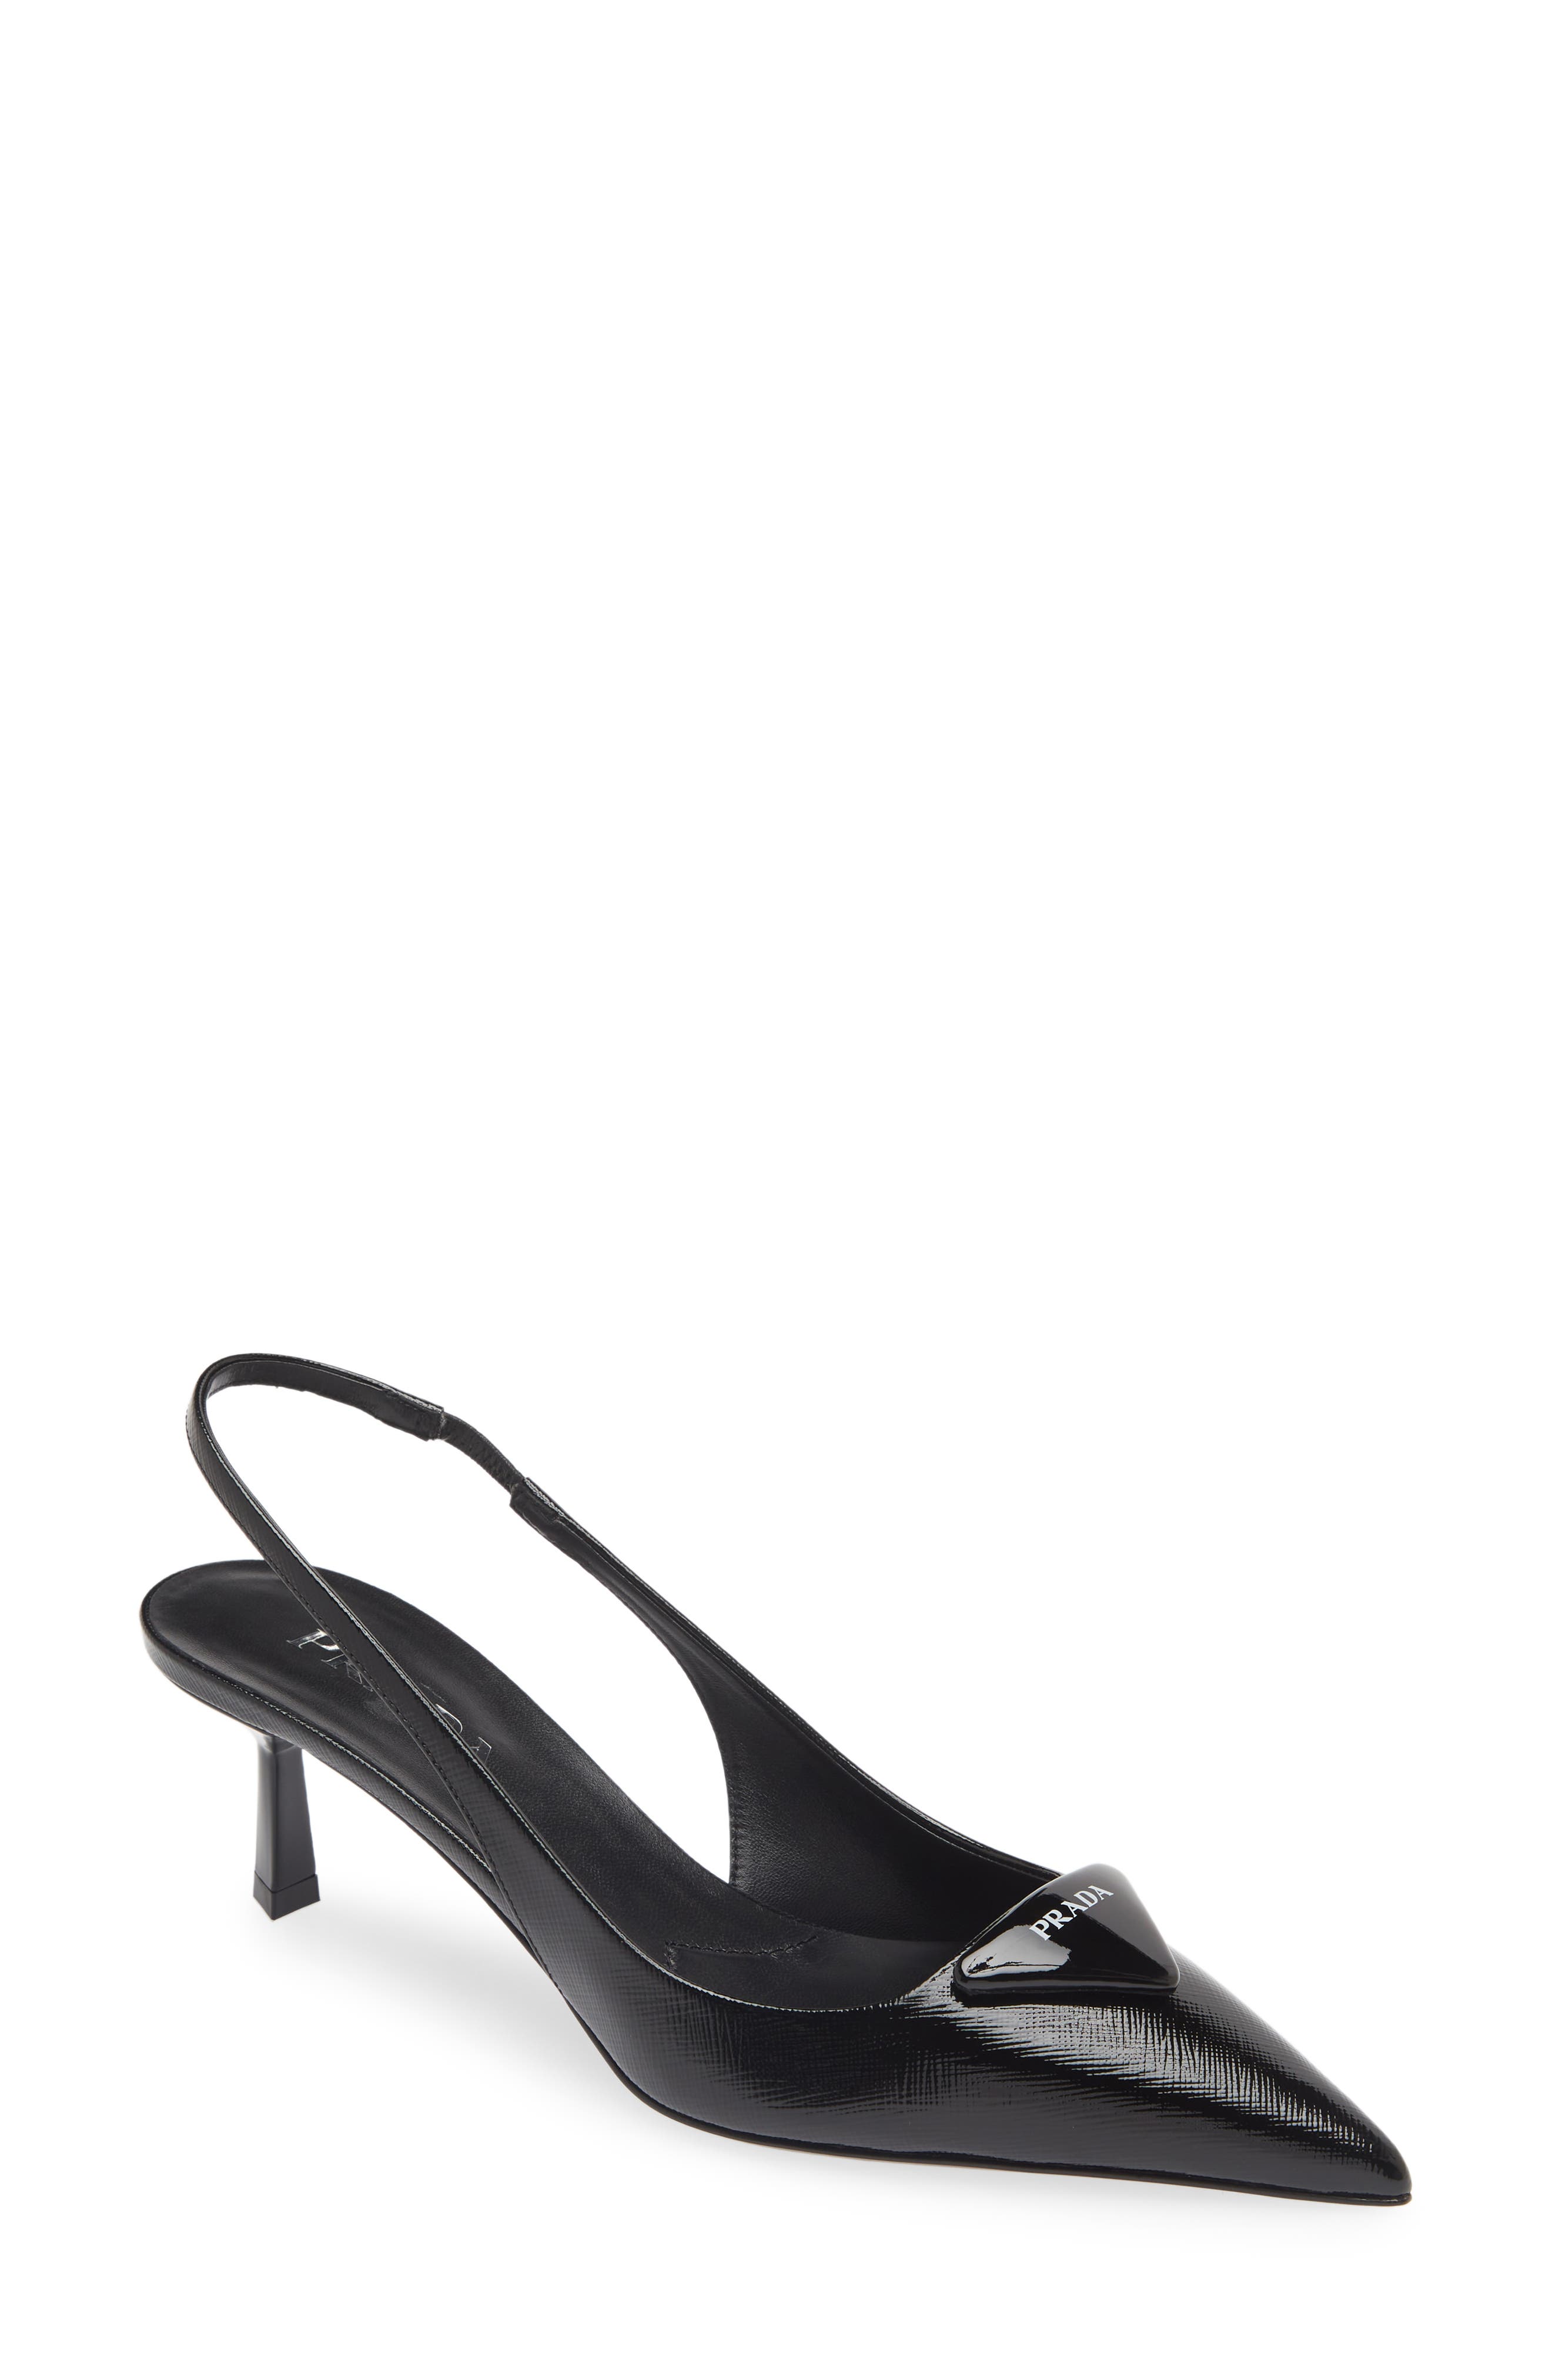 Eli1957 slingback patent leather ballerina shoes - Black